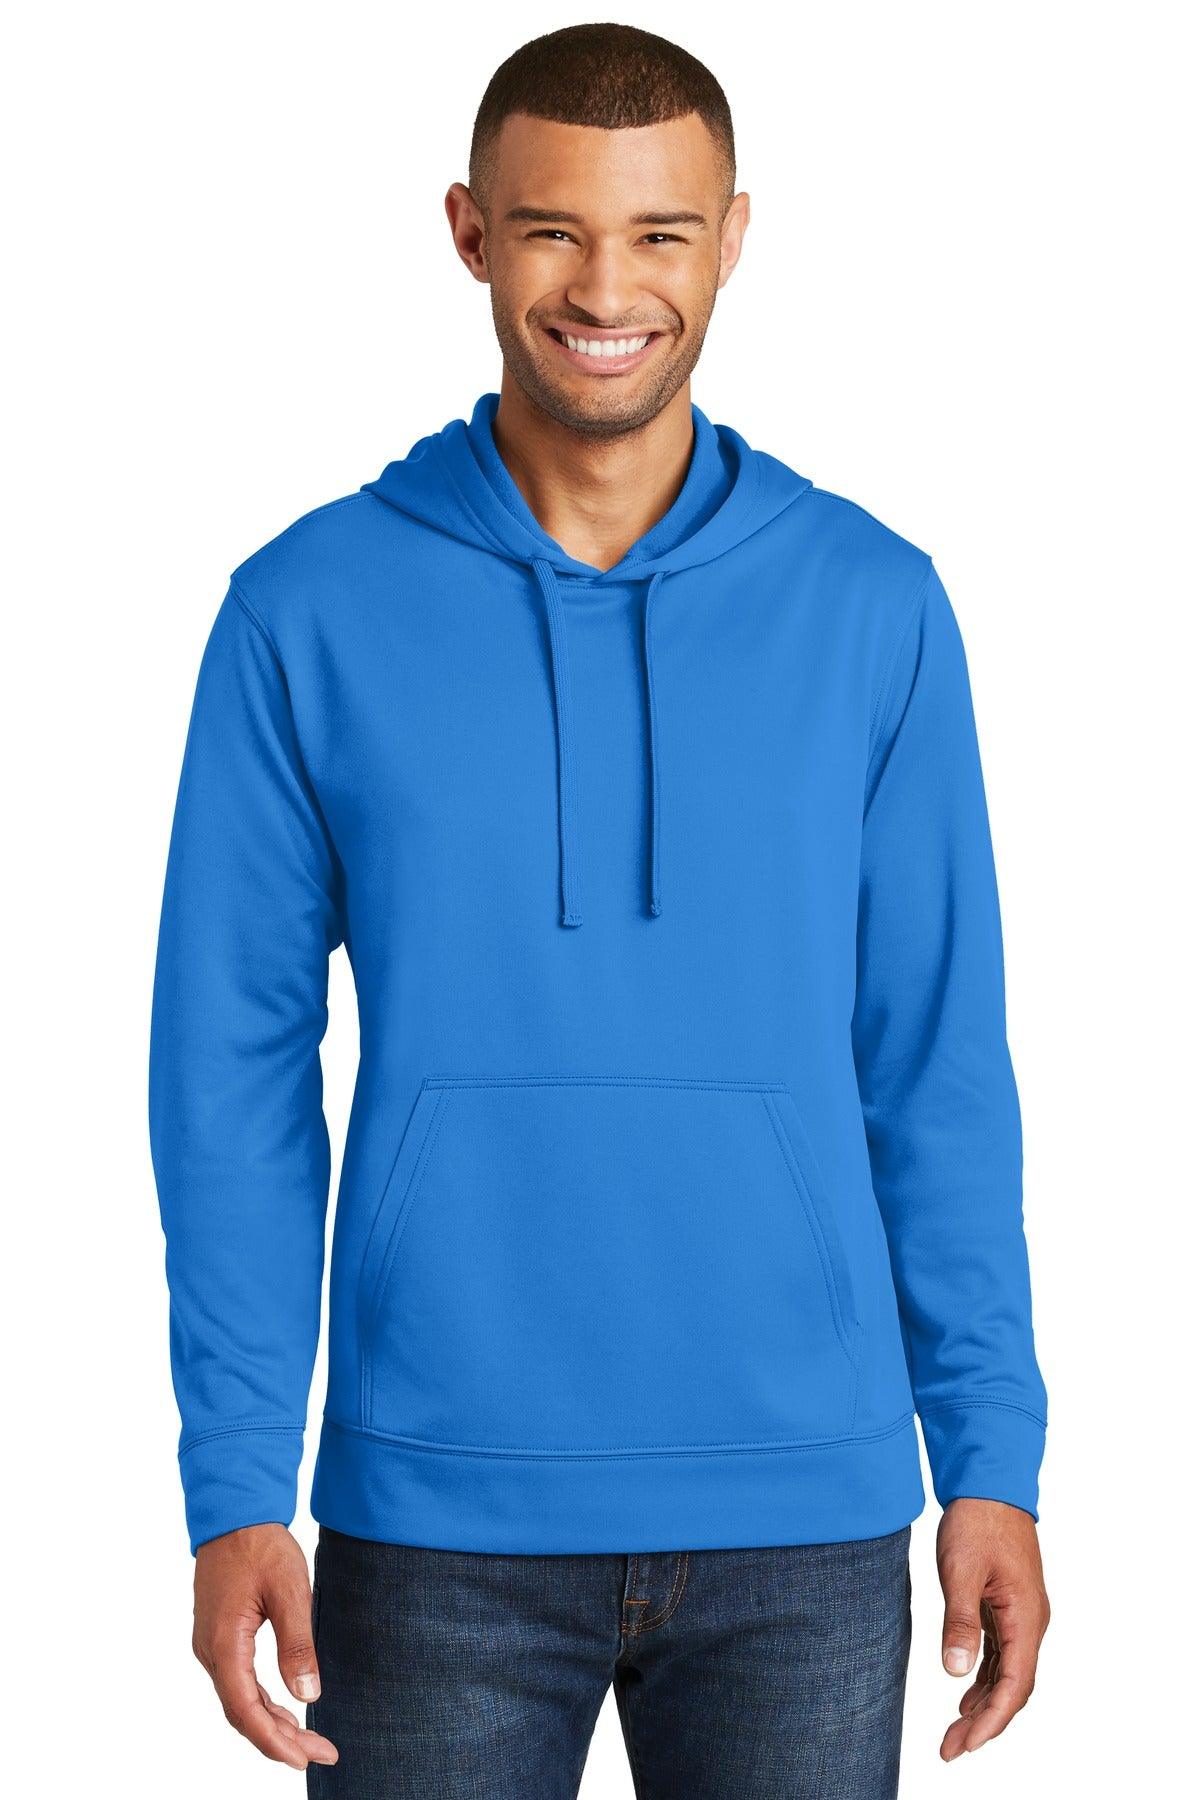 Port & Company Performance Fleece Pullover Hooded Sweatshirt. PC590H - Dresses Max